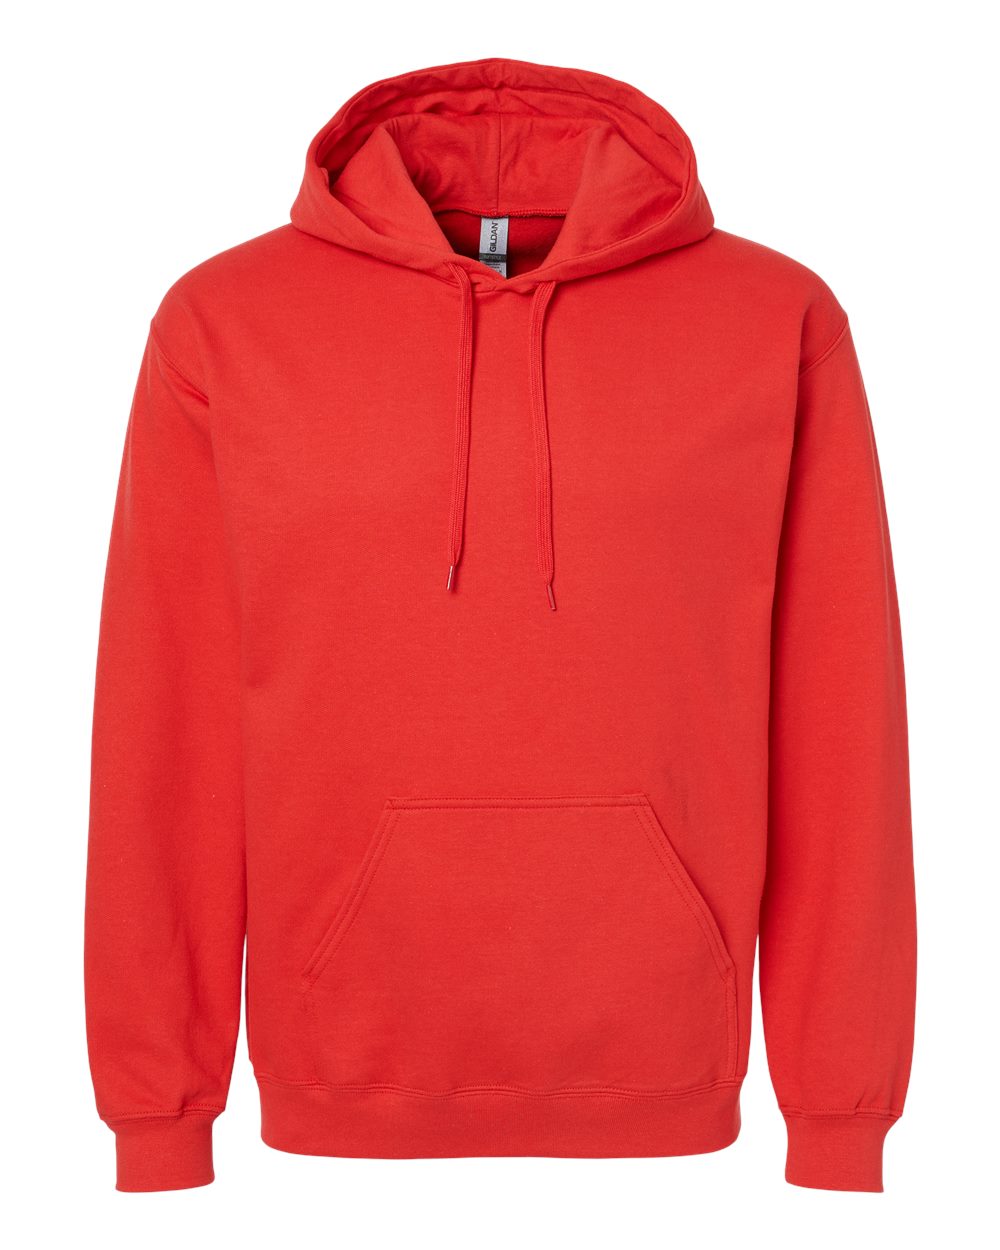 Pretreated Gildan SF500 Softstyle Hooded Sweatshirt - Red